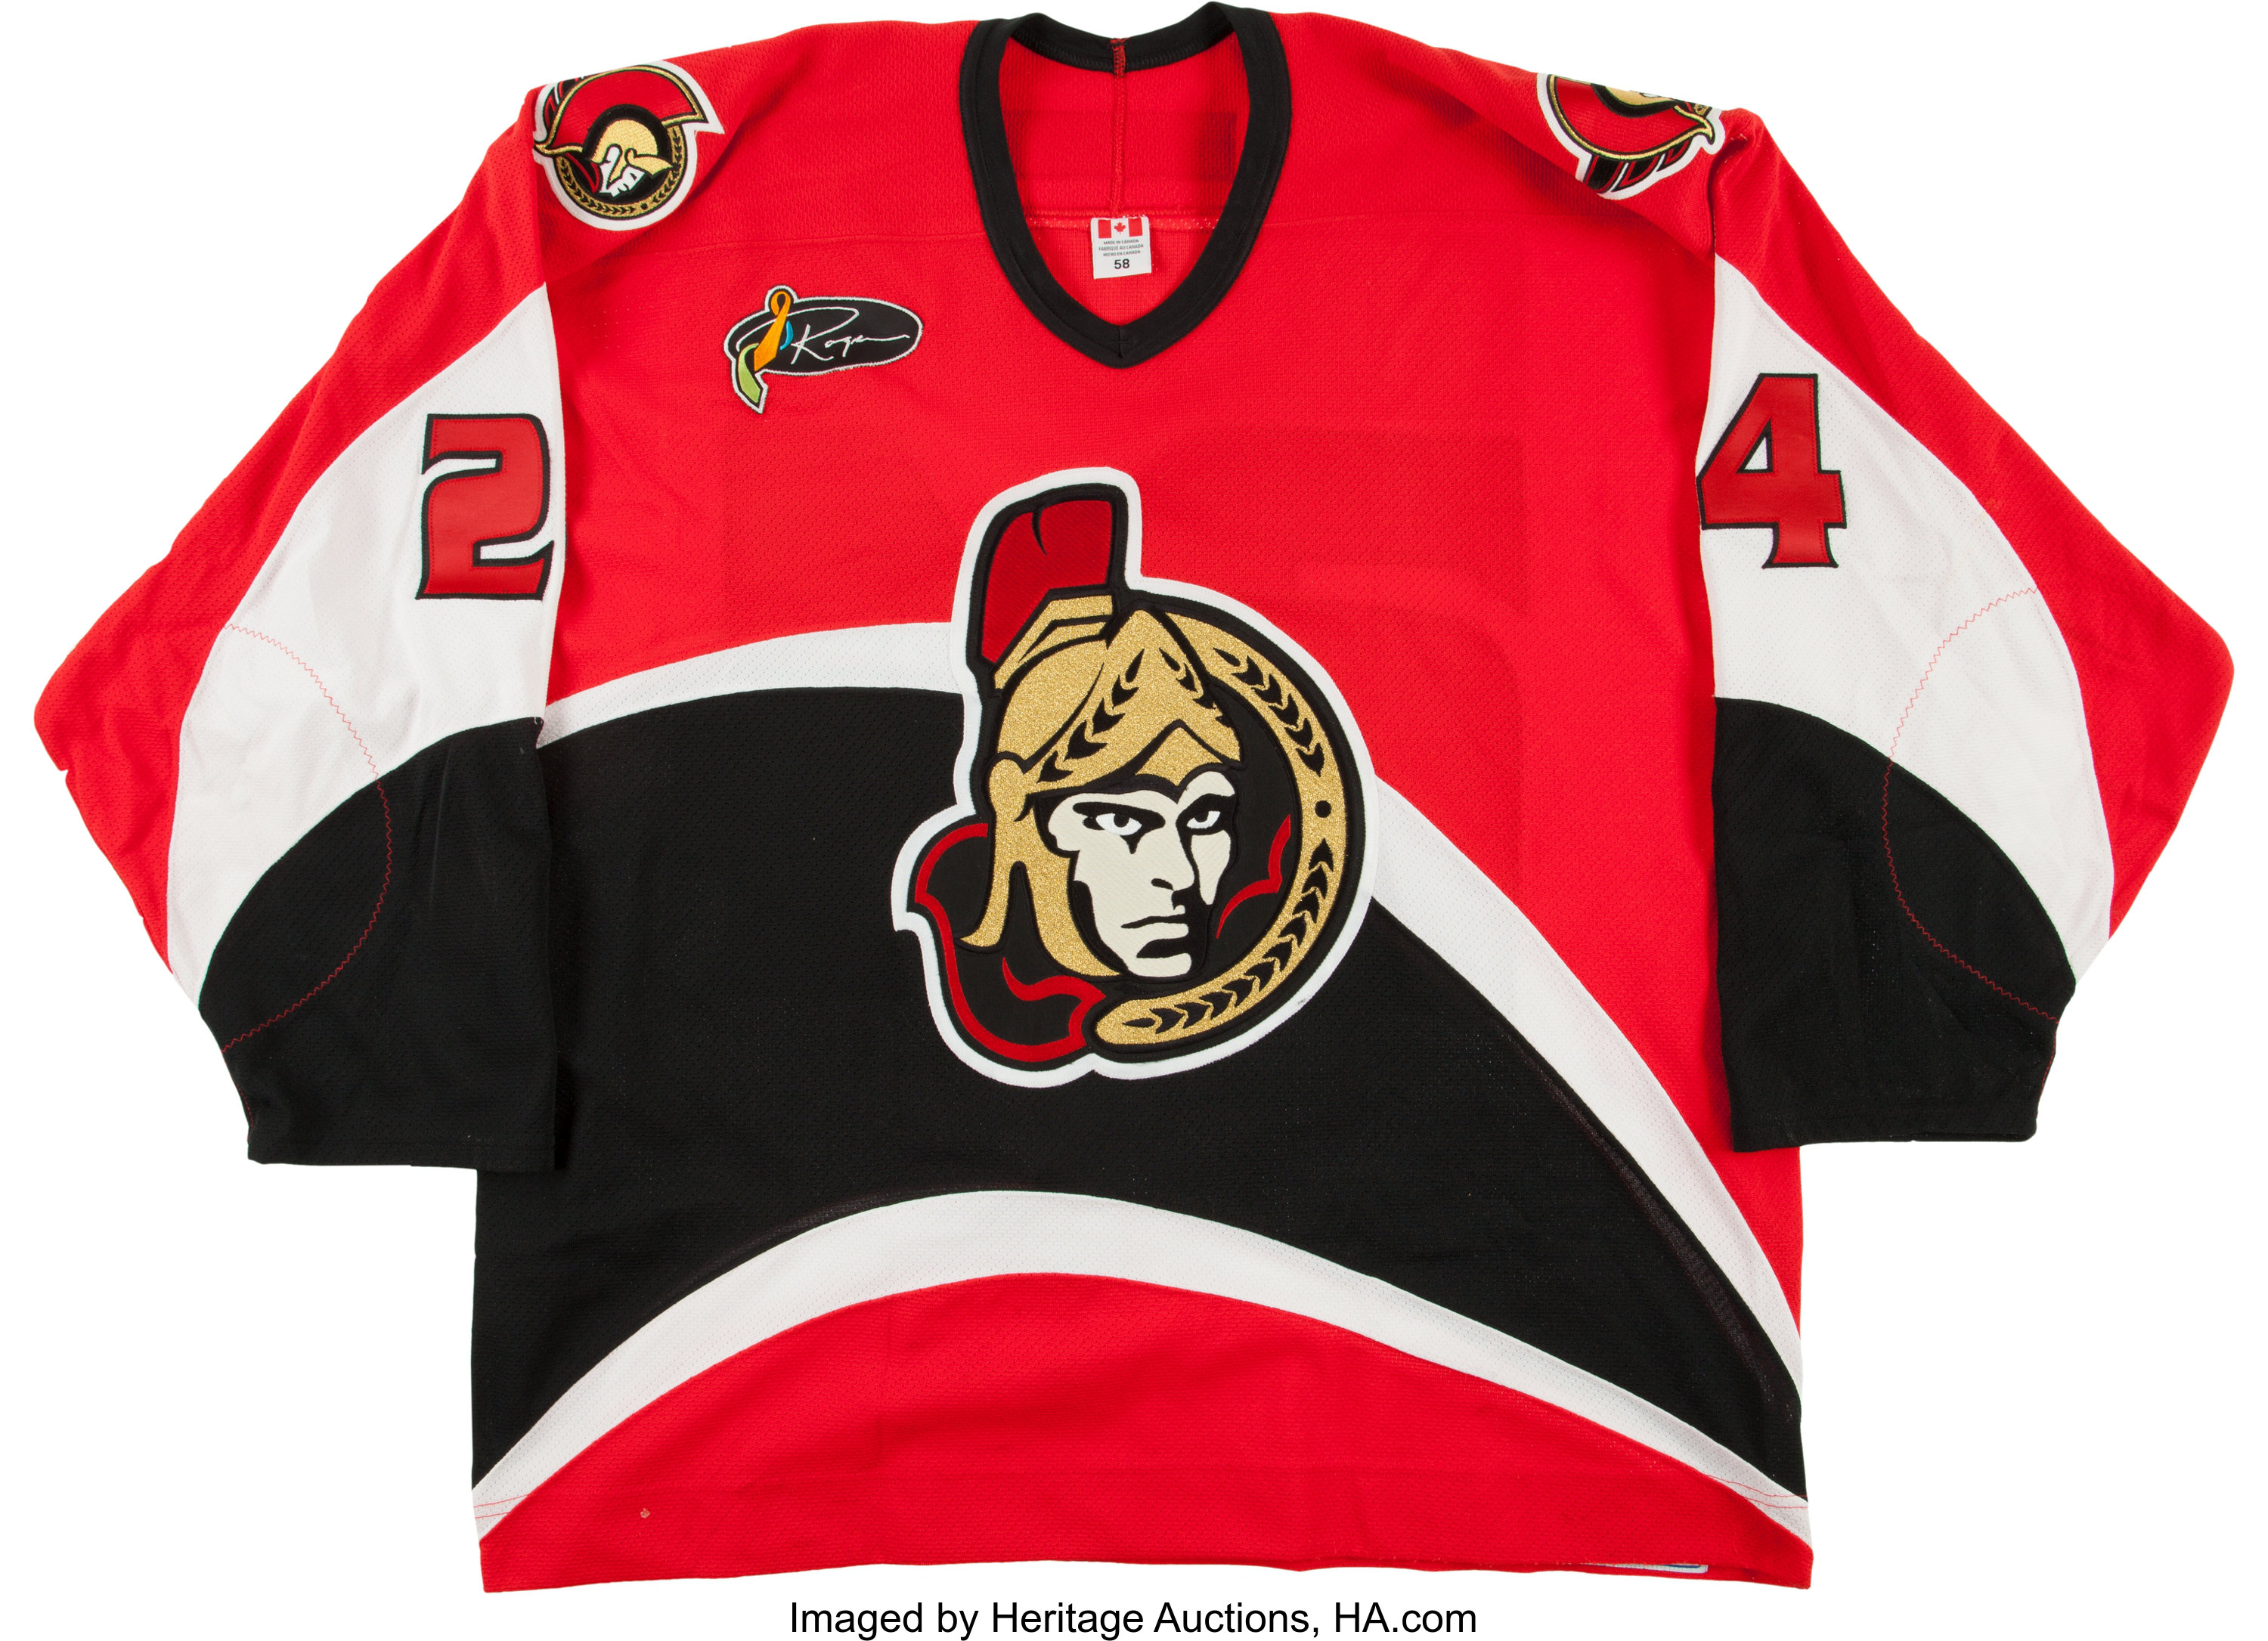 Ottawa Senators unveil jerseys for outdoor game